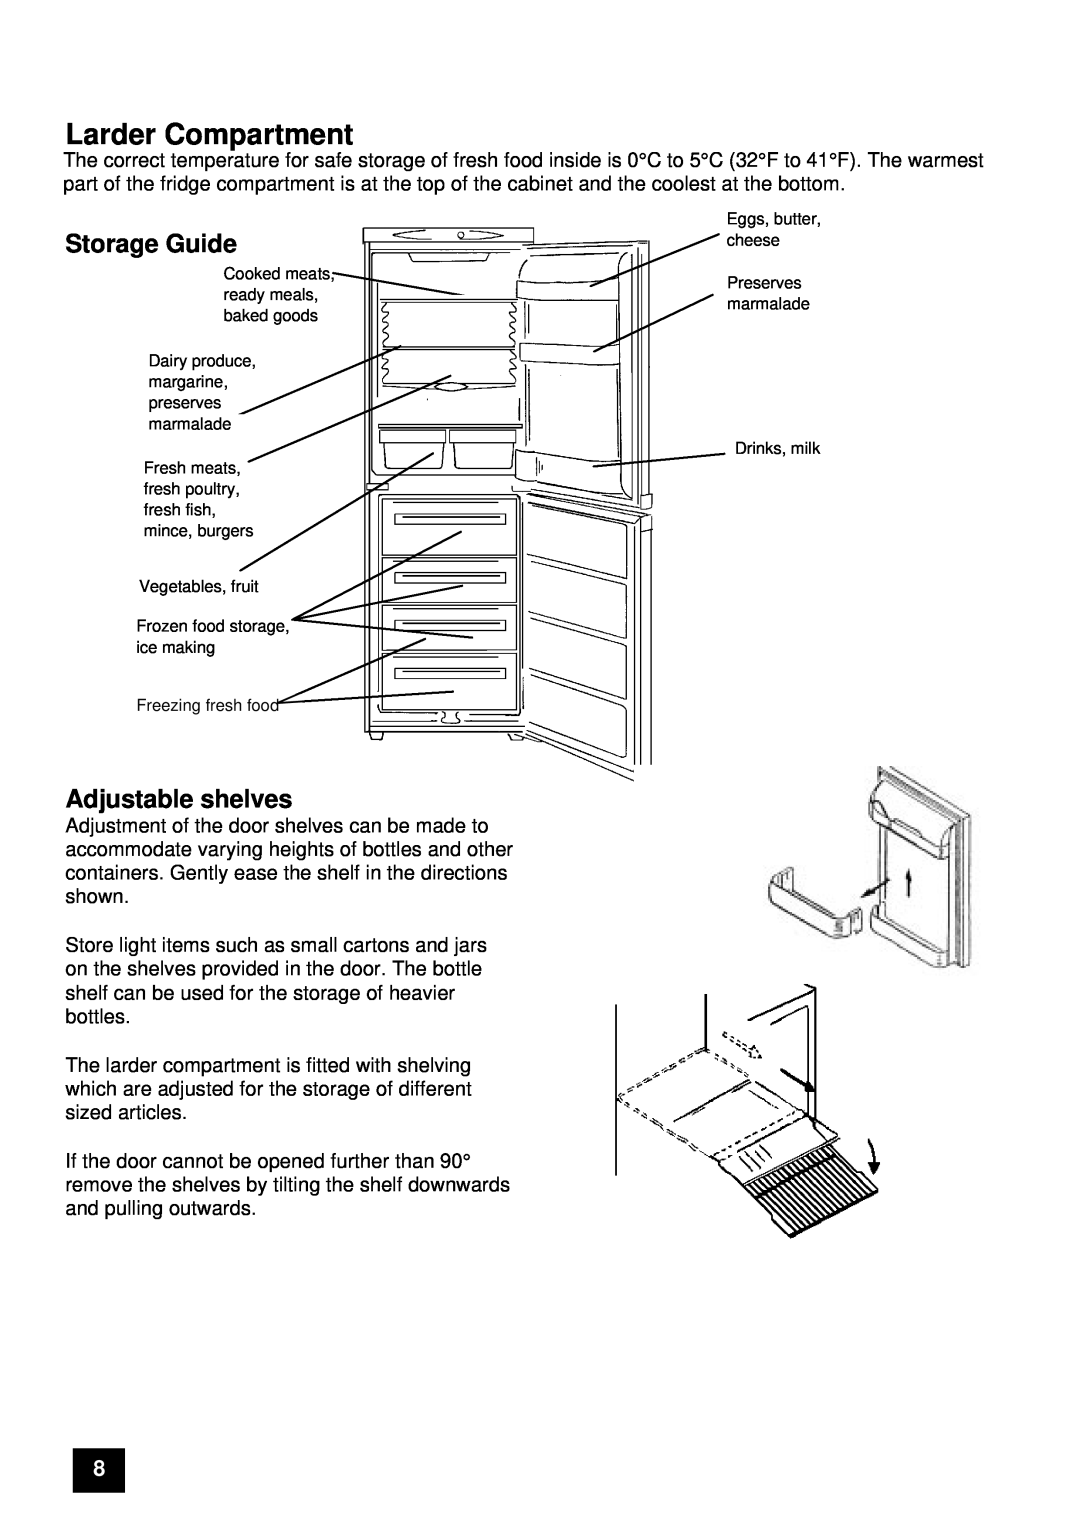 Tricity Bendix FDF107W instruction manual Larder Compartment, Storage Guide, Adjustable shelves 